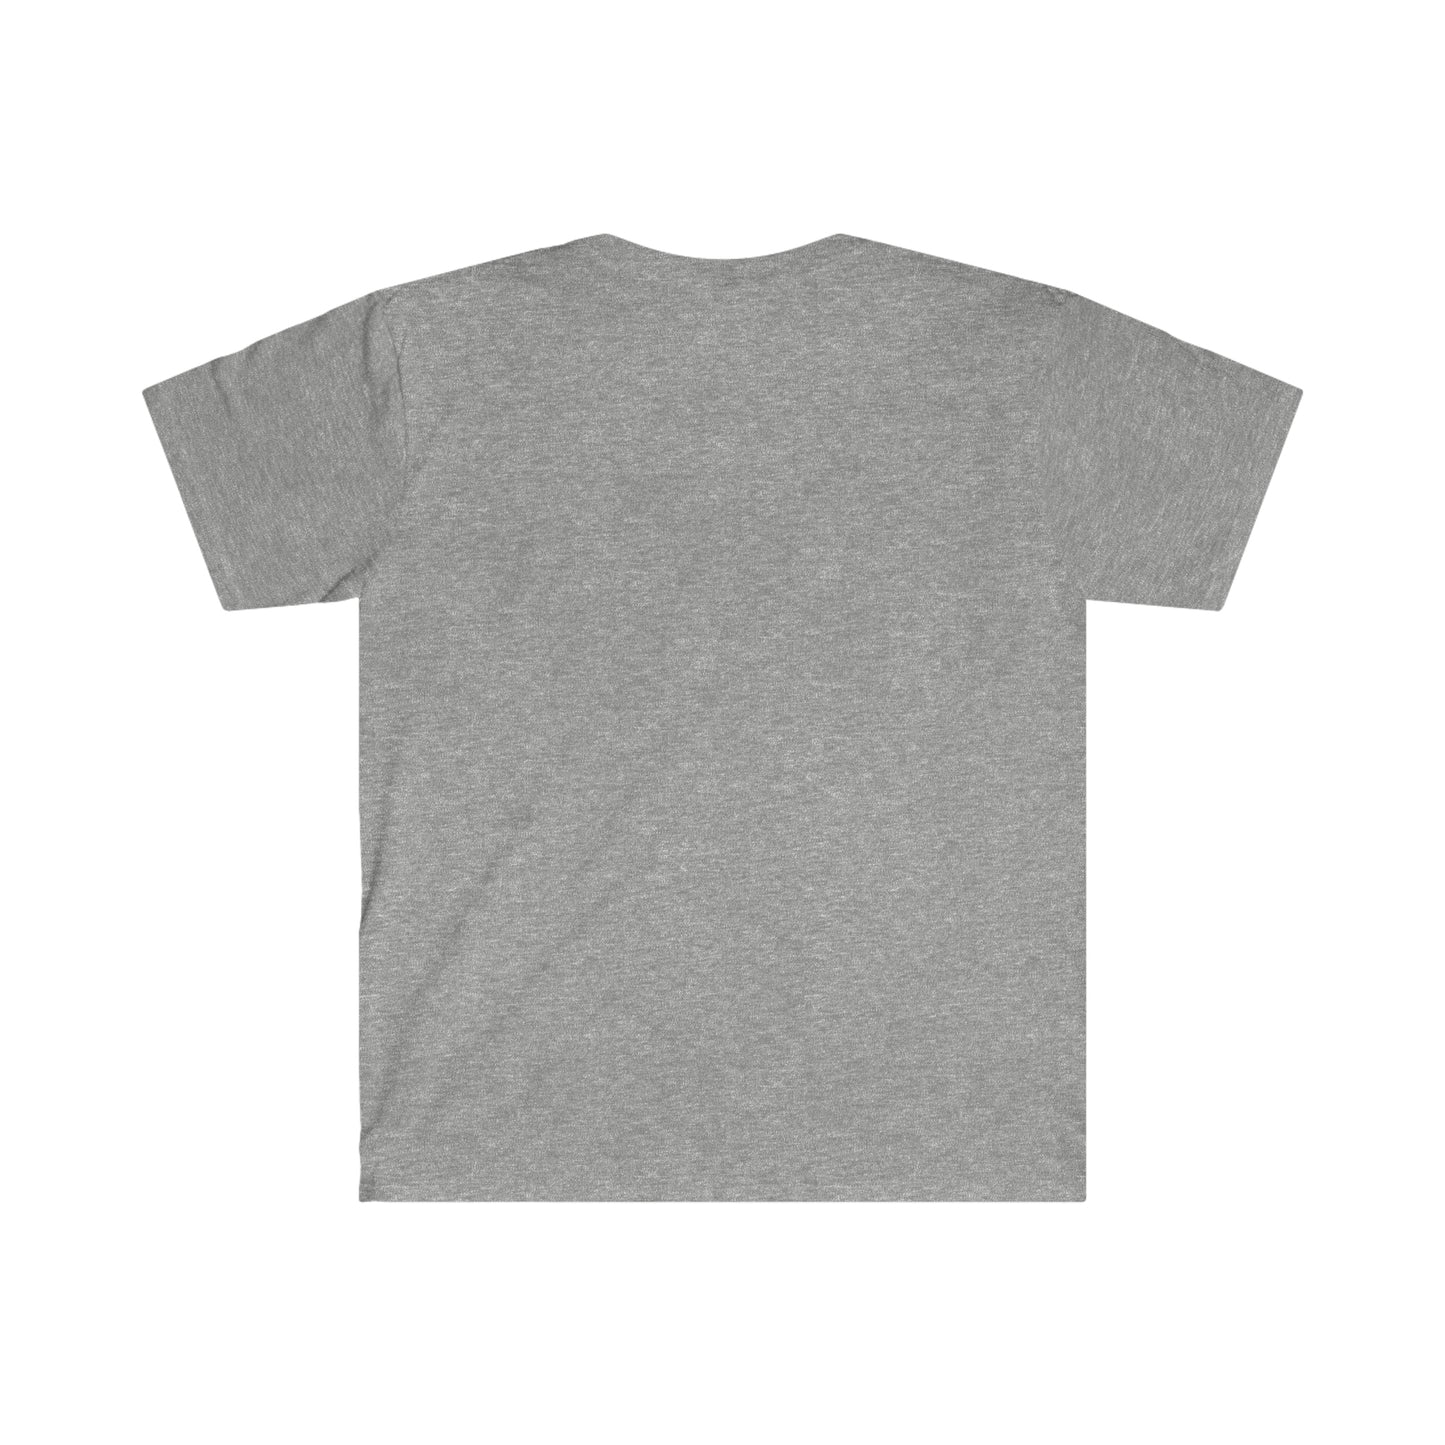 WANCE (walk + dance) Unisex Softstyle T-Shirt